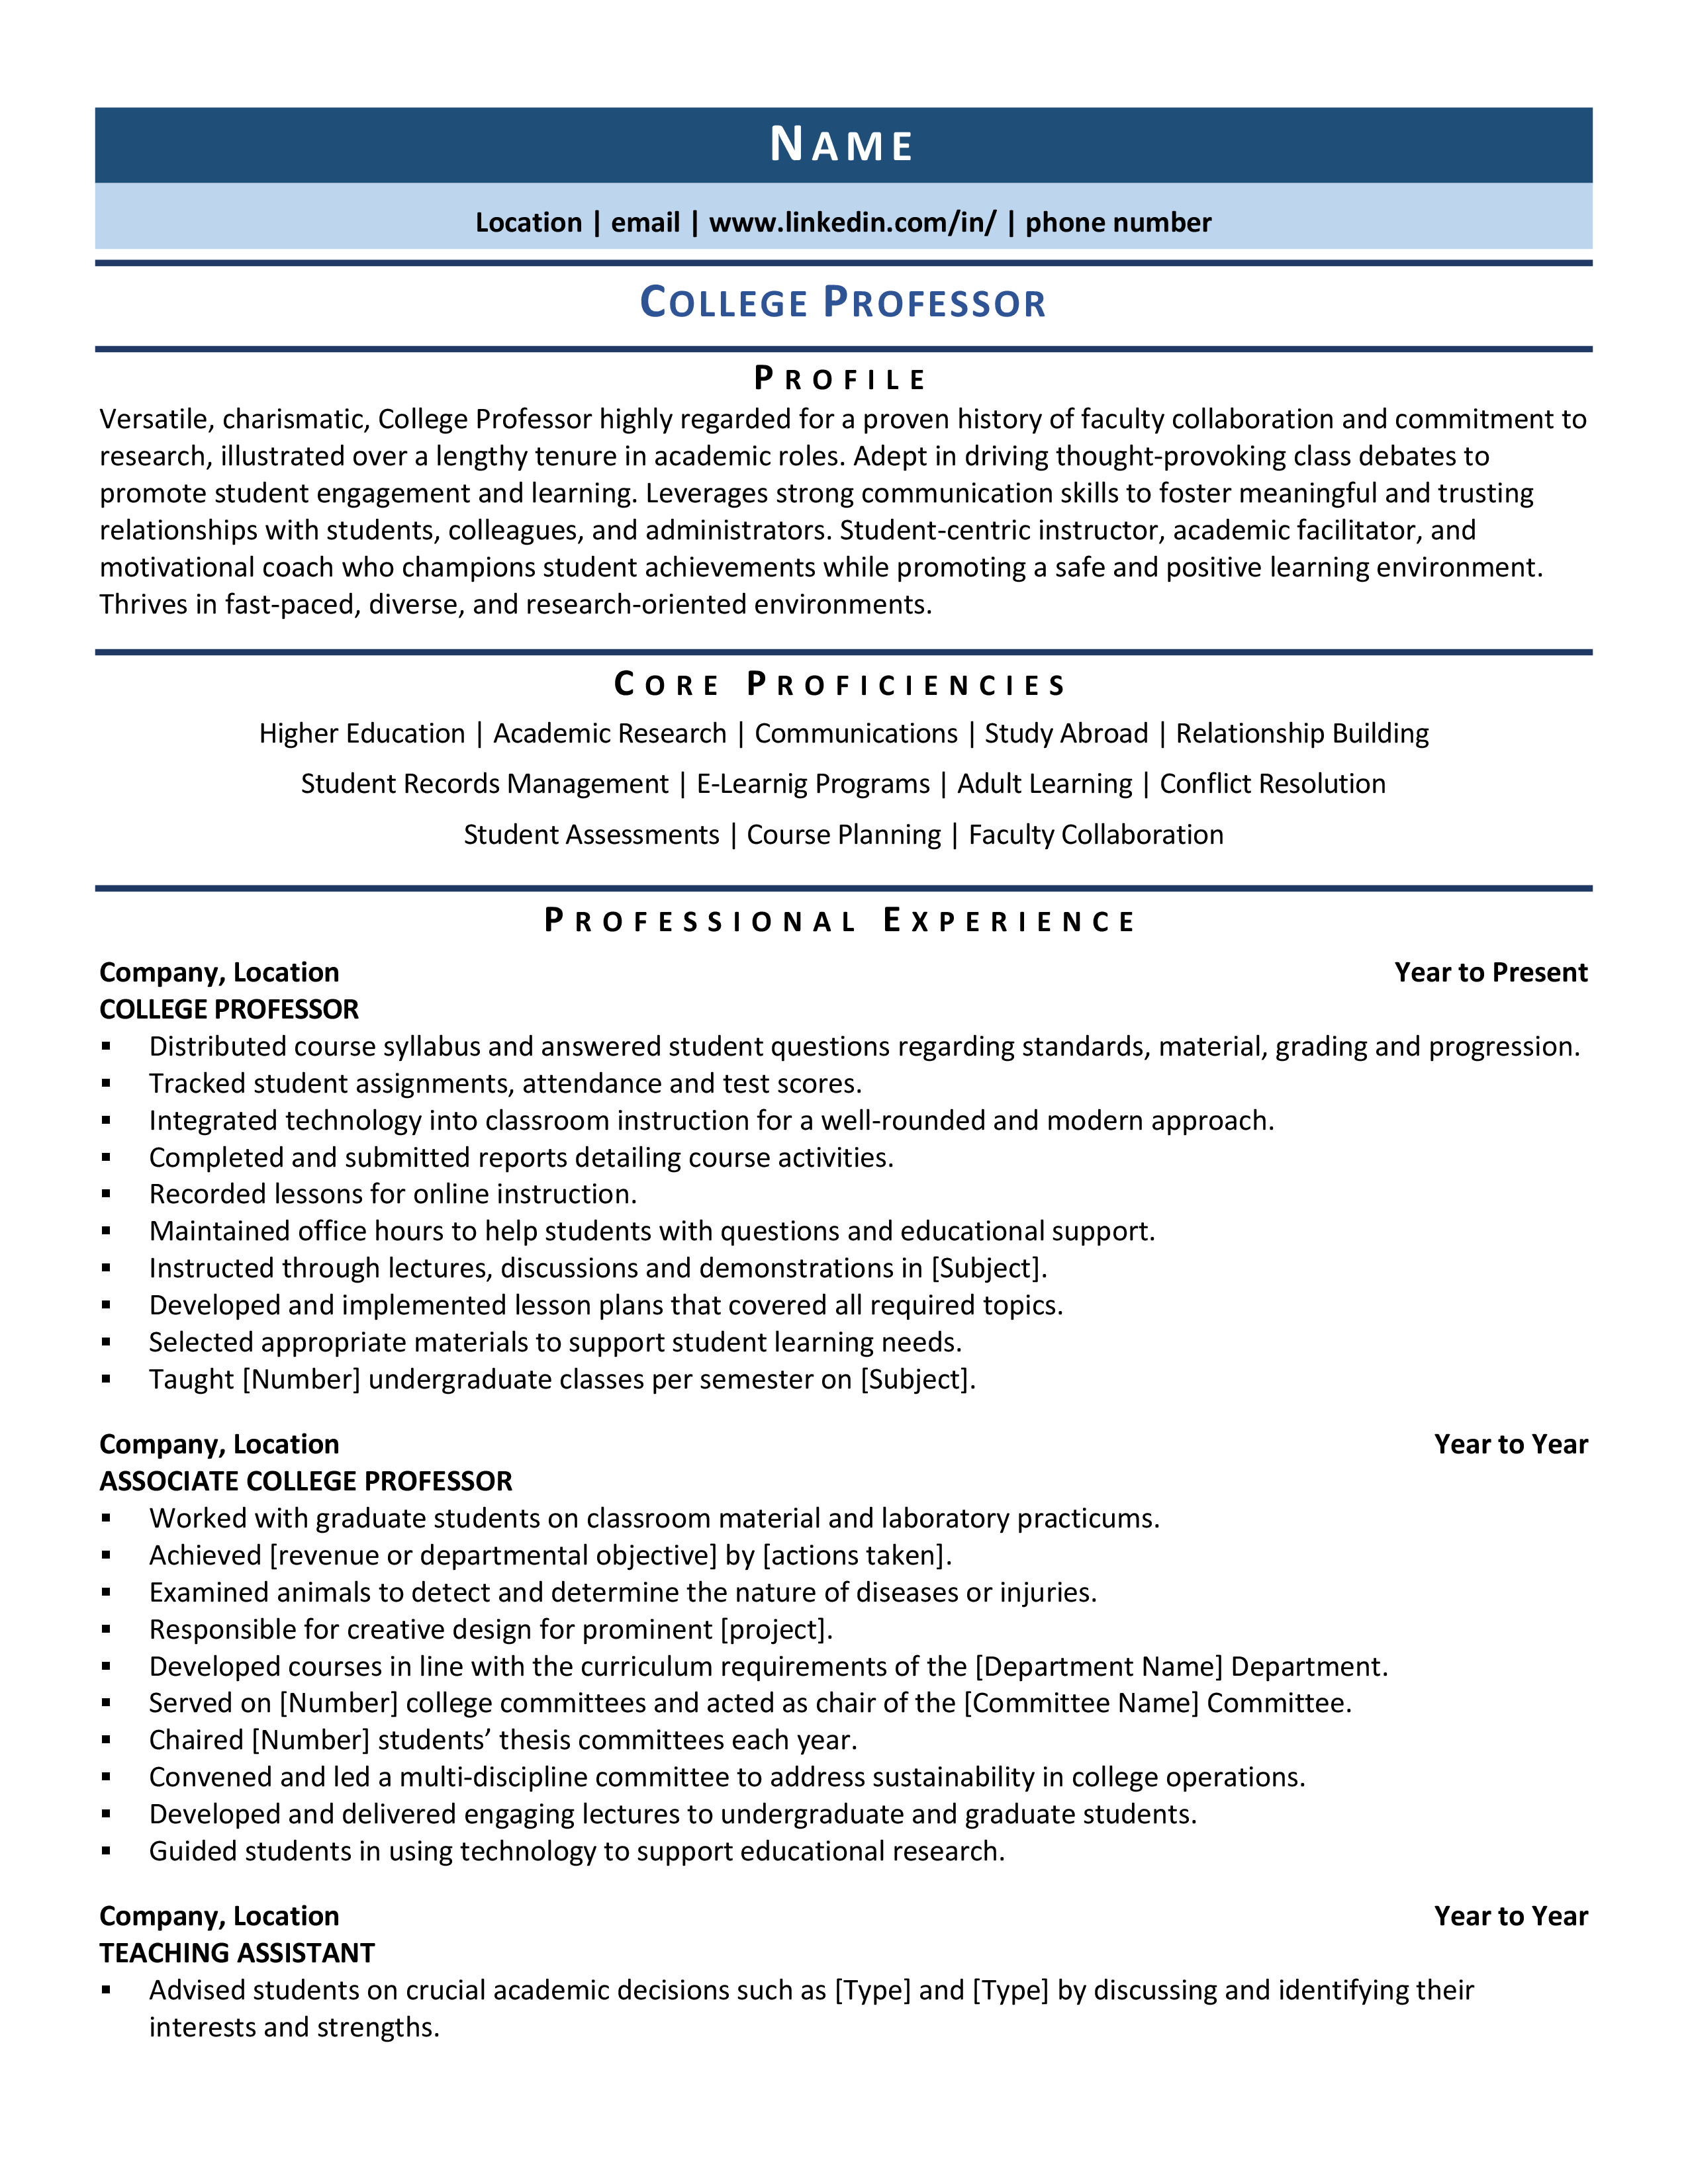 conestoga college resume help